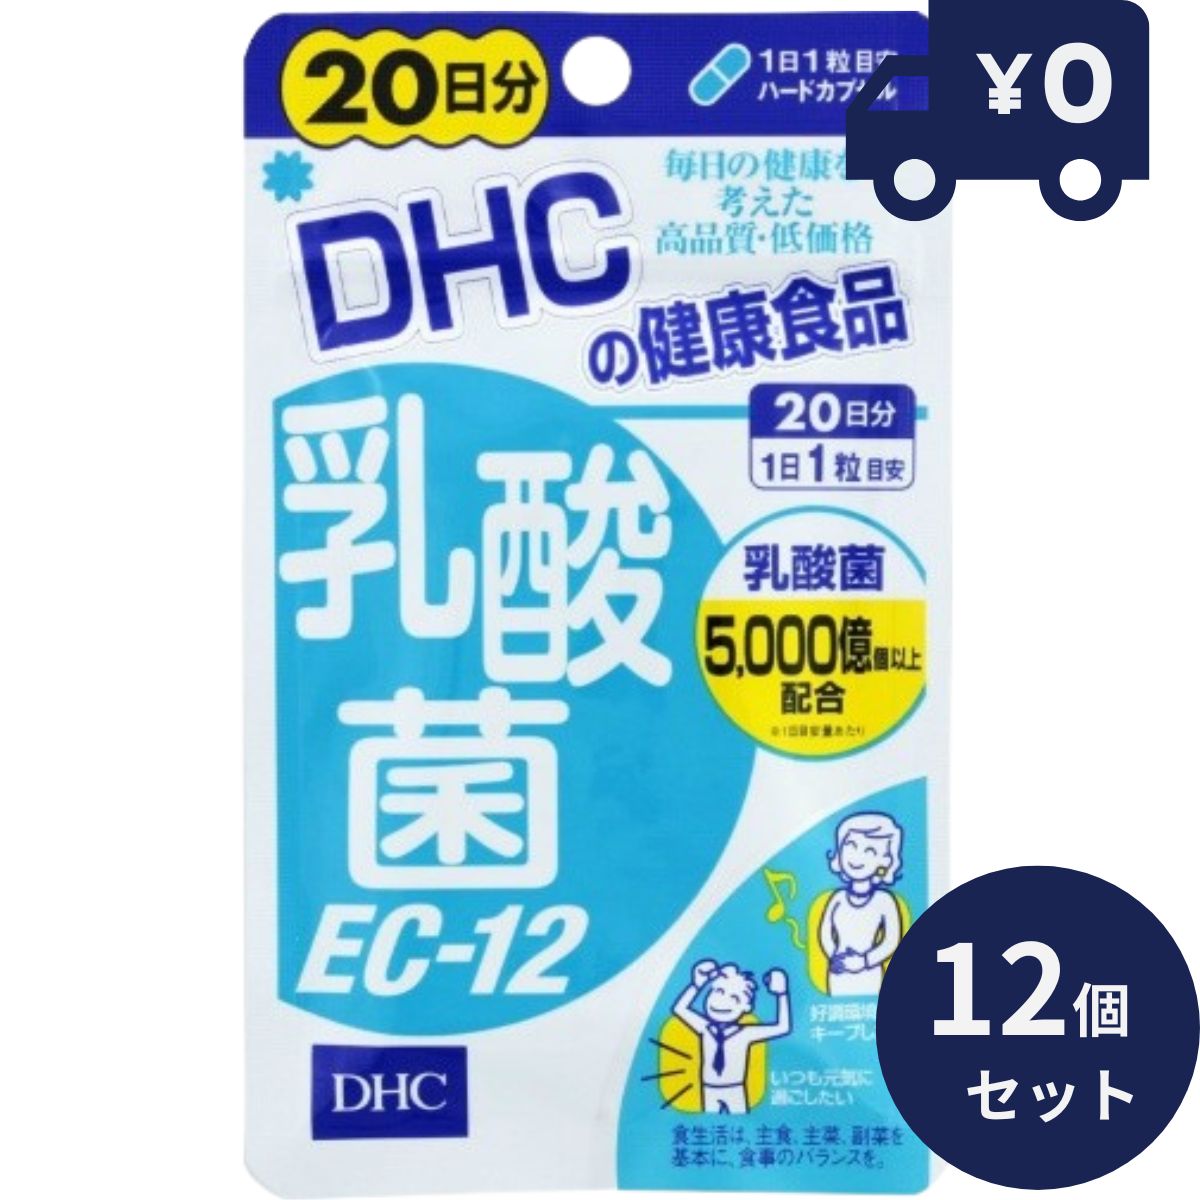 DHC 乳酸菌 EC-12 20日分 20粒 12個セット ディーエイチシー サプリメント 健康食品 粒タイプ 人気 サプリ 乳酸菌 善玉菌